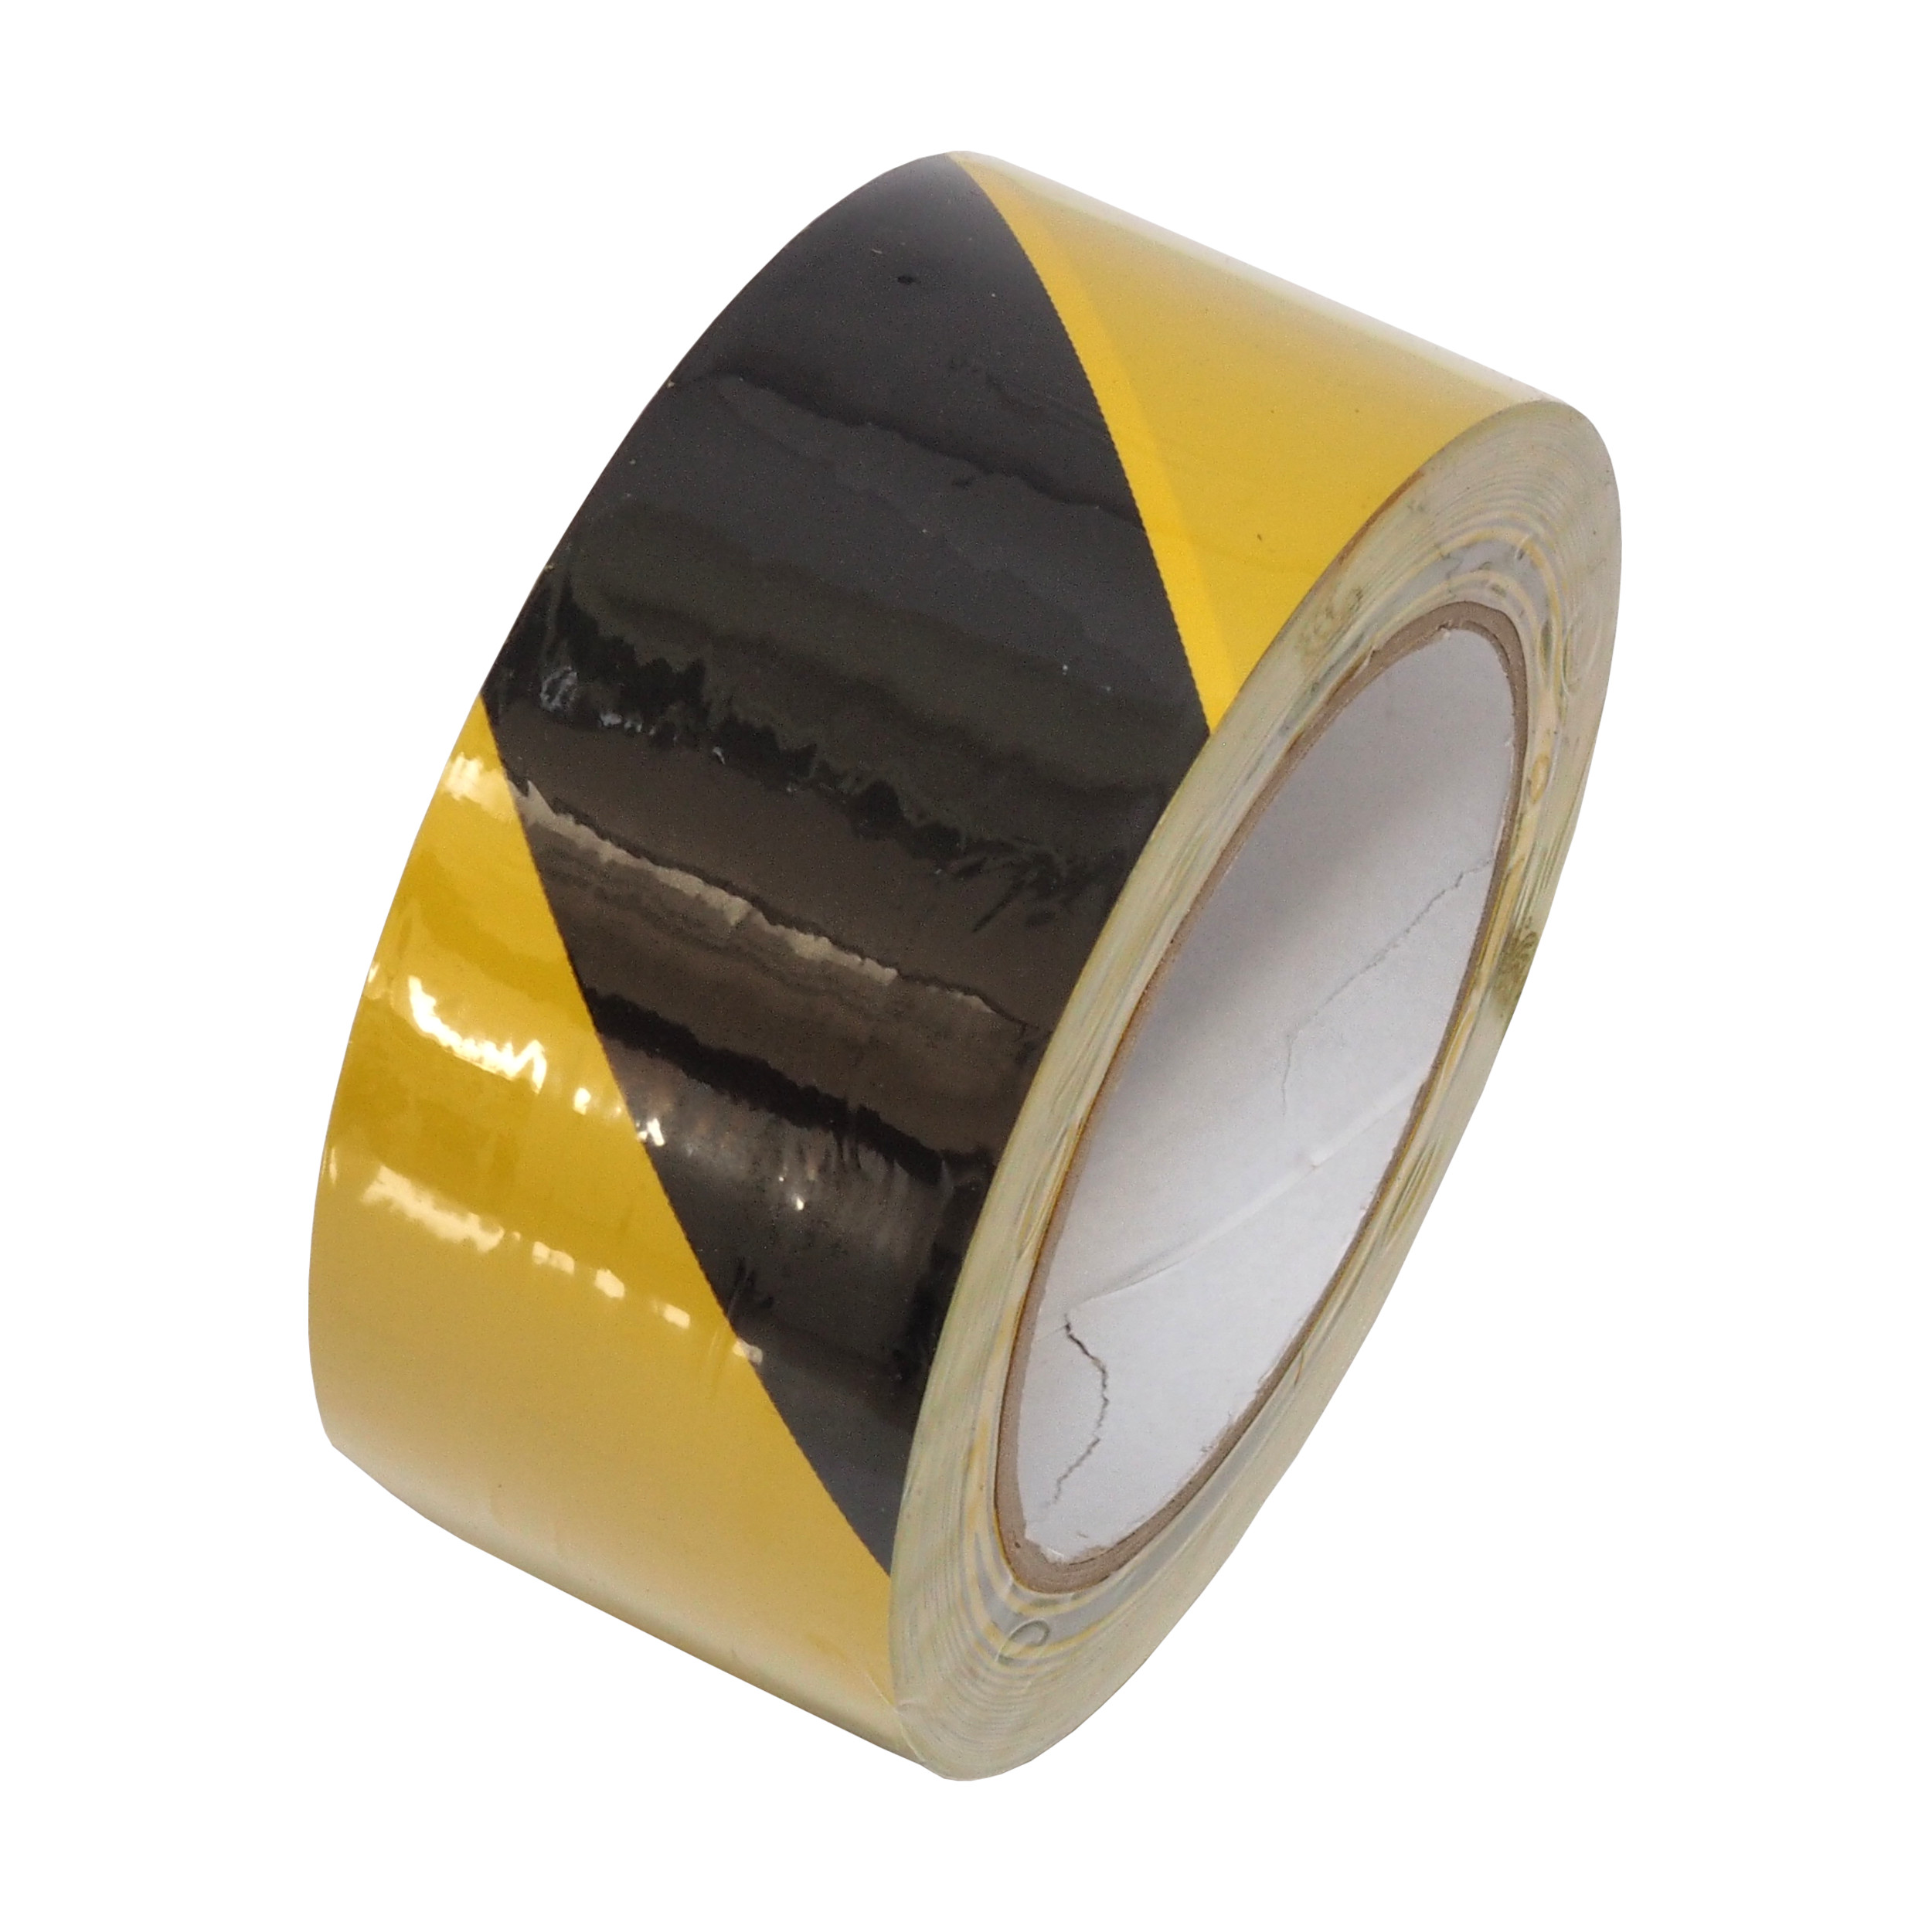 páska výstražná, lepící, PVC, černo – žlutá, 50 mm x 33 m 0.36 Kg TOP Sklad4 701303 49